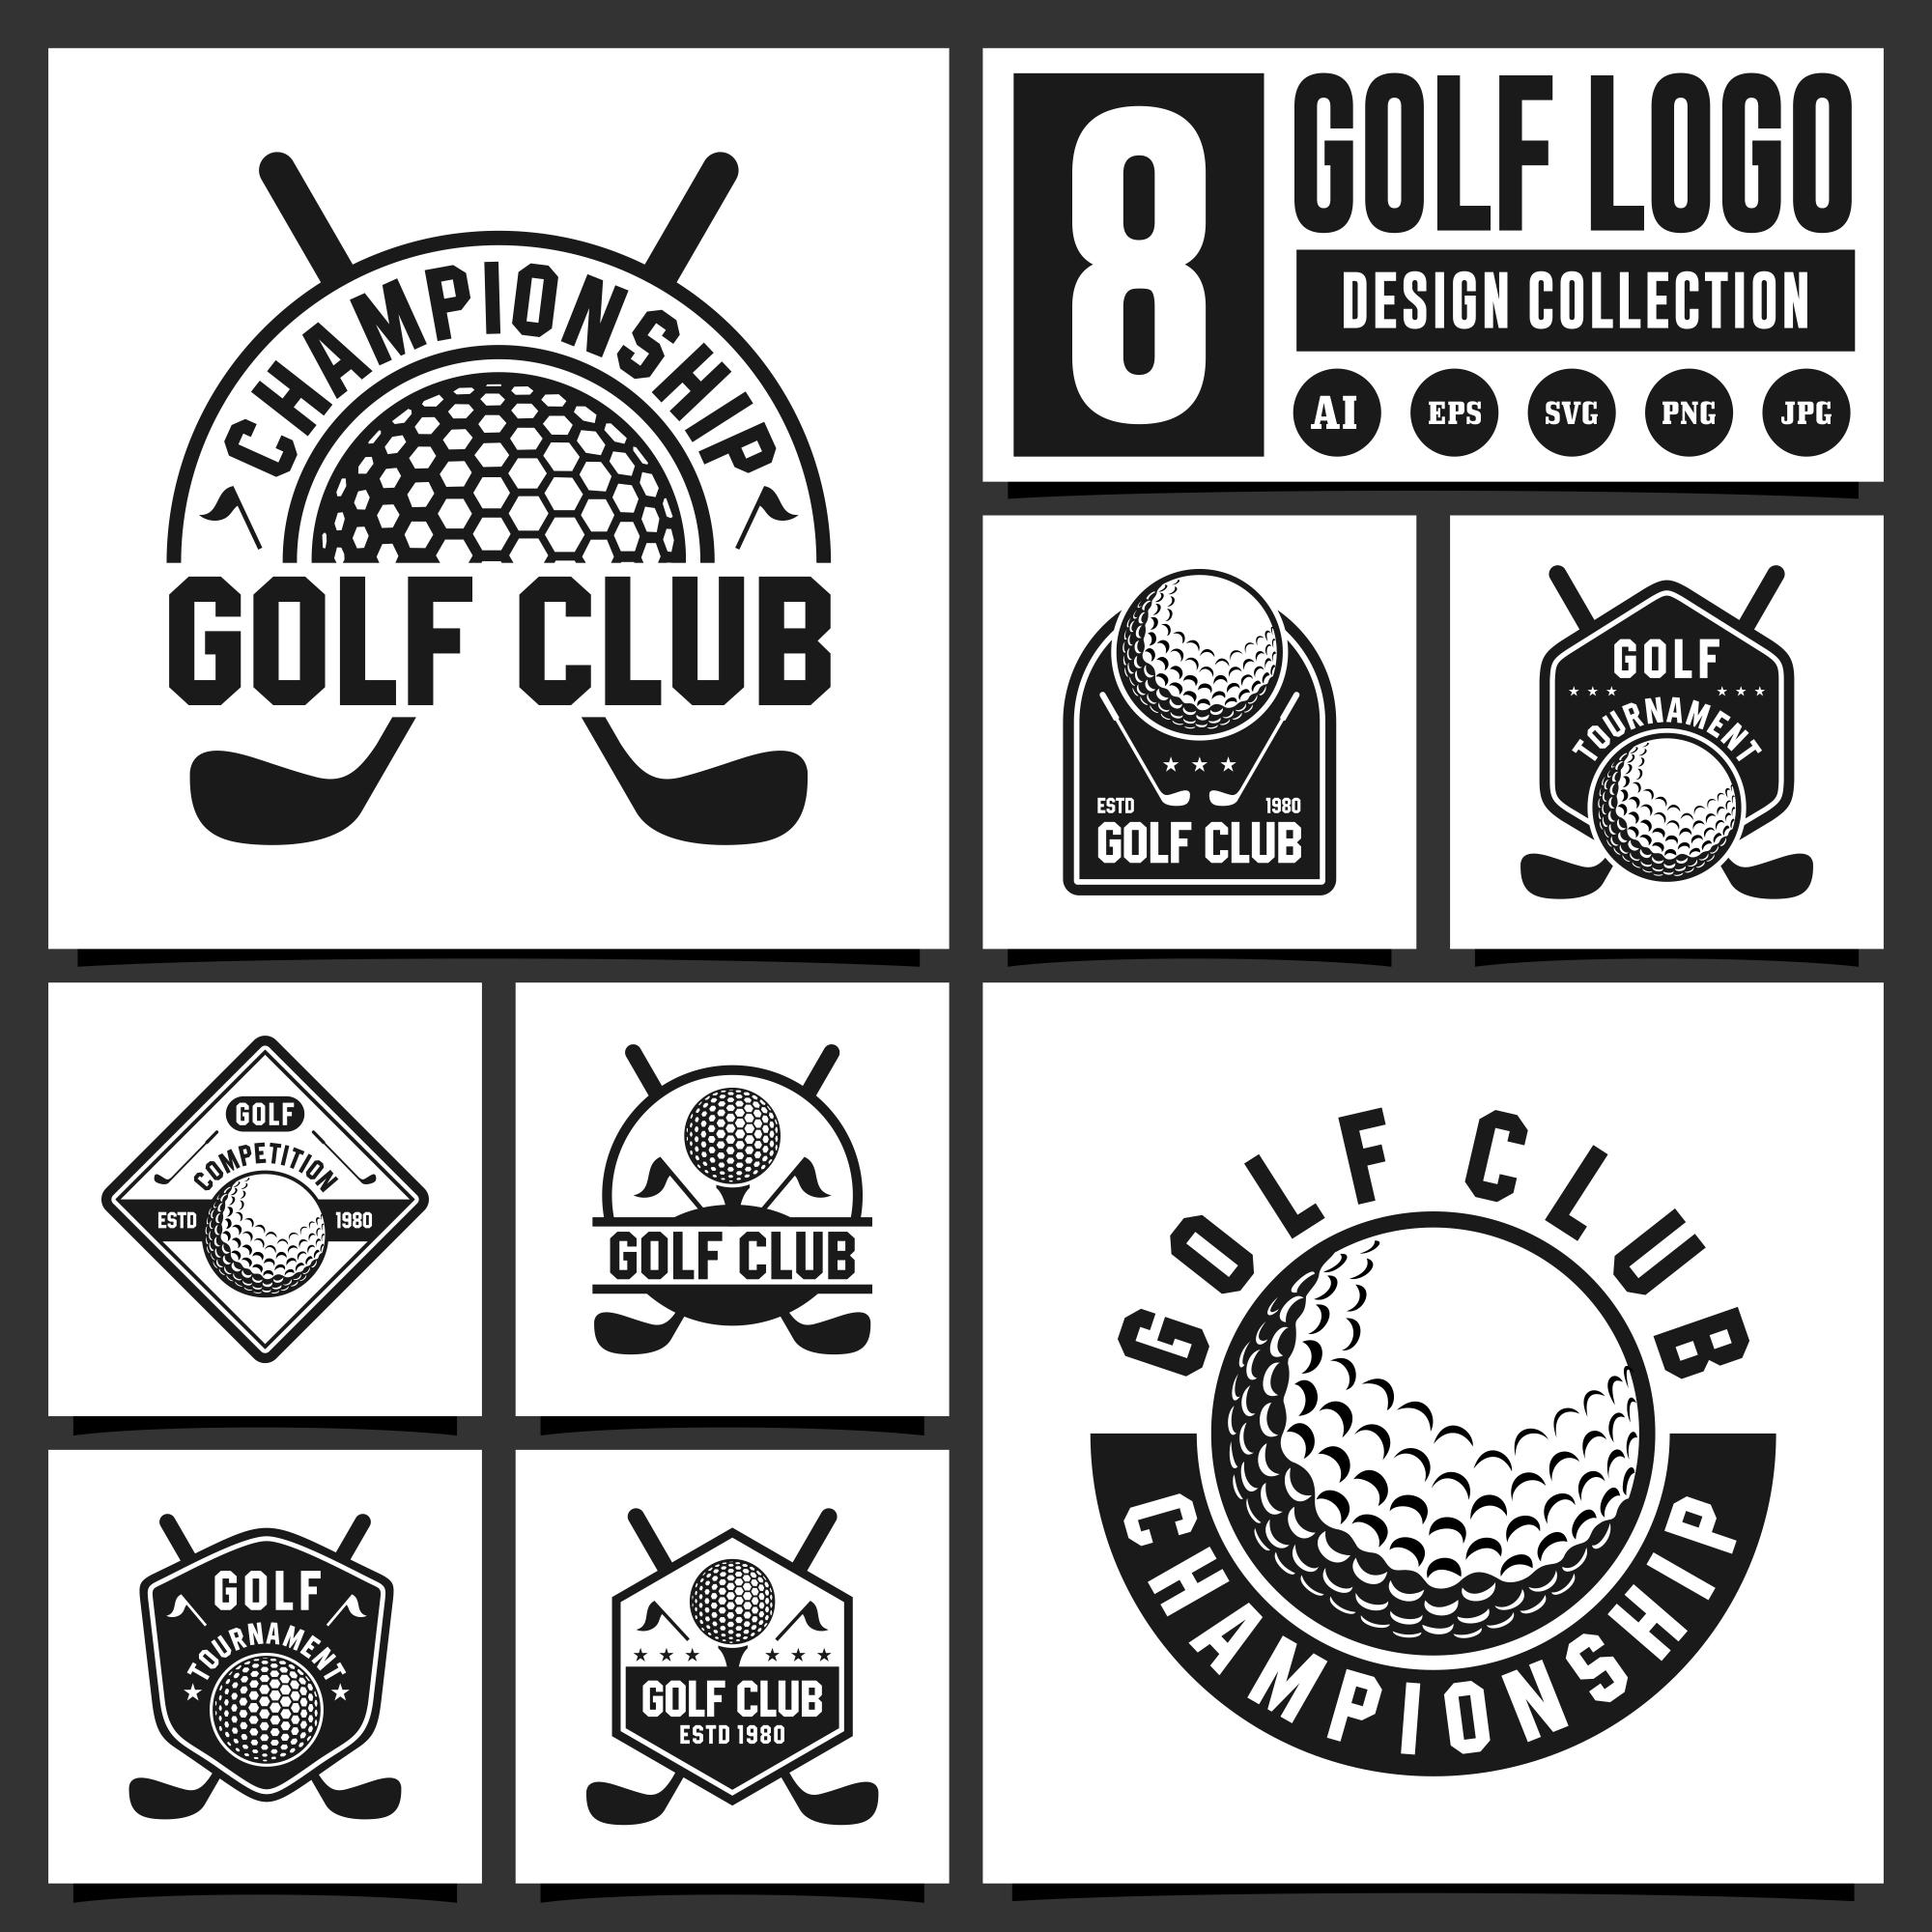 8 Golf logo design collection cover image.